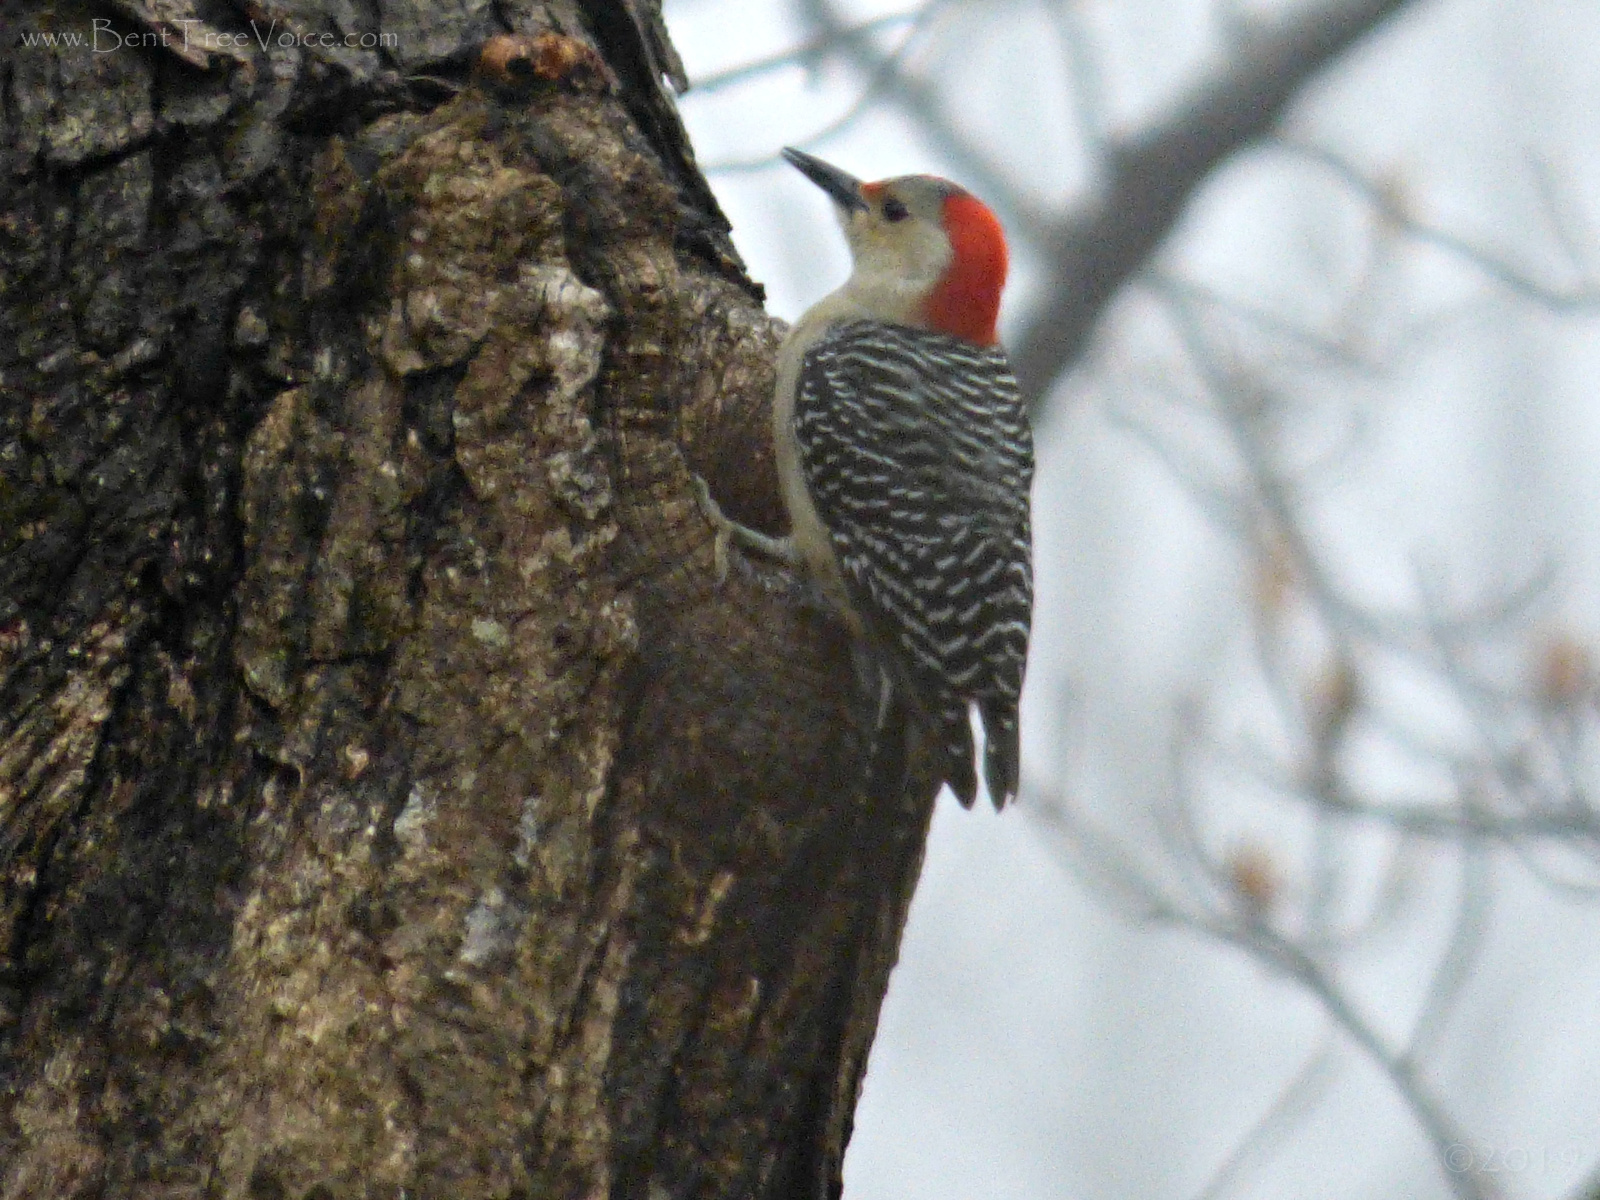 February 11, 2019 - Red-bellied woodpecker in Bent Tree